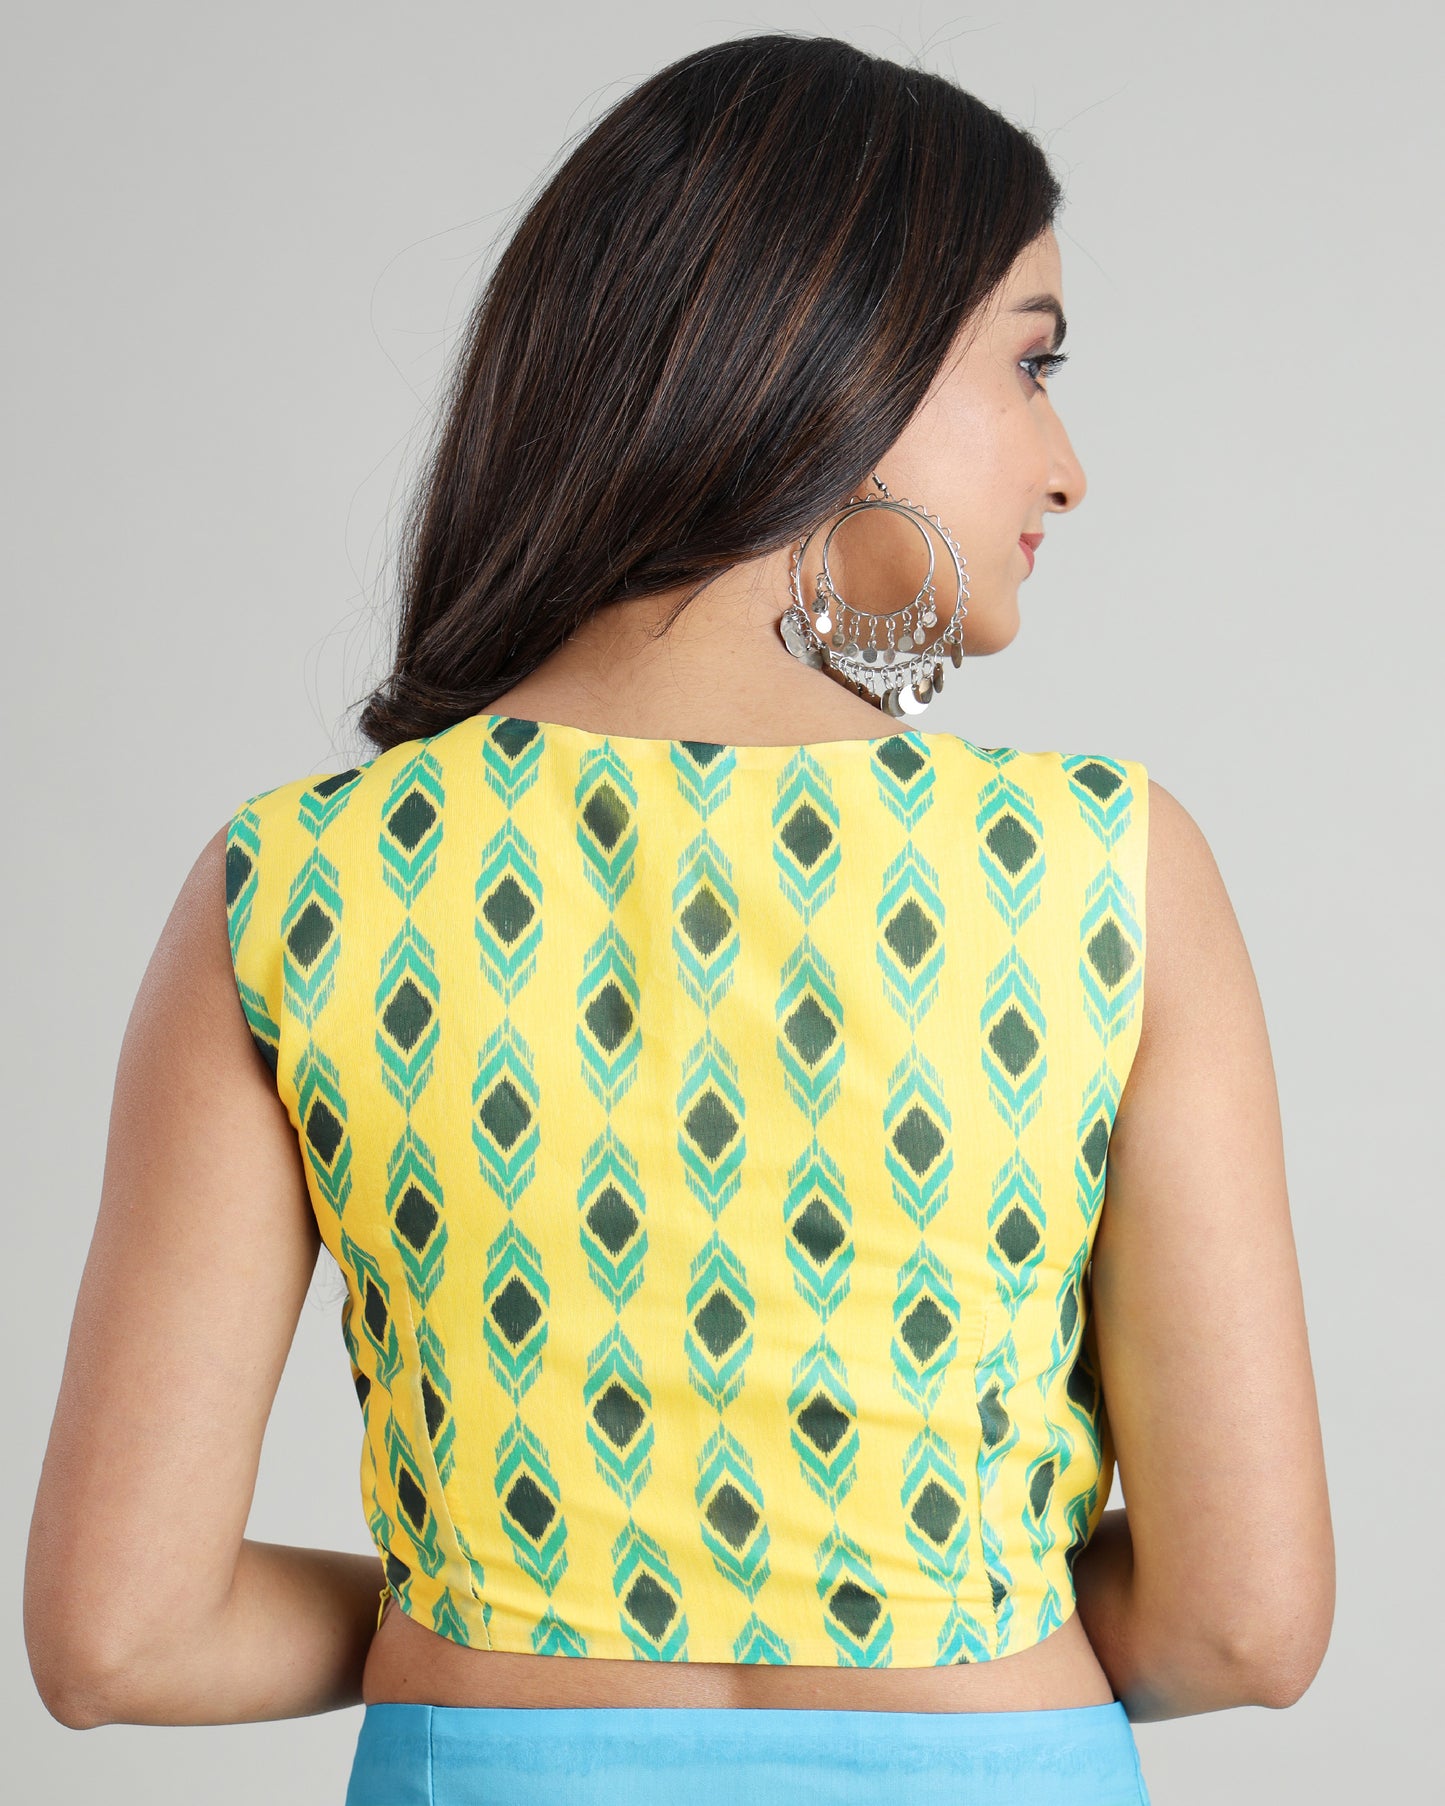 Dress for Success: Empowering Sleeveless Ikat Print Blouse